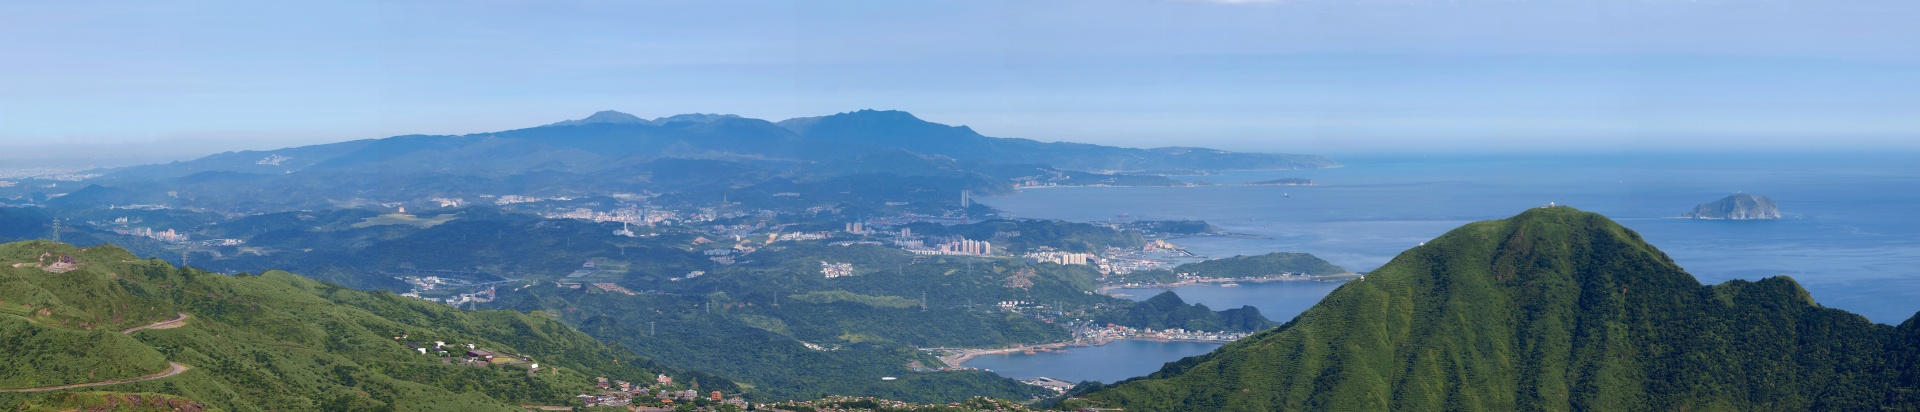 panorama north-east taiwan yangmingshan national park free photo